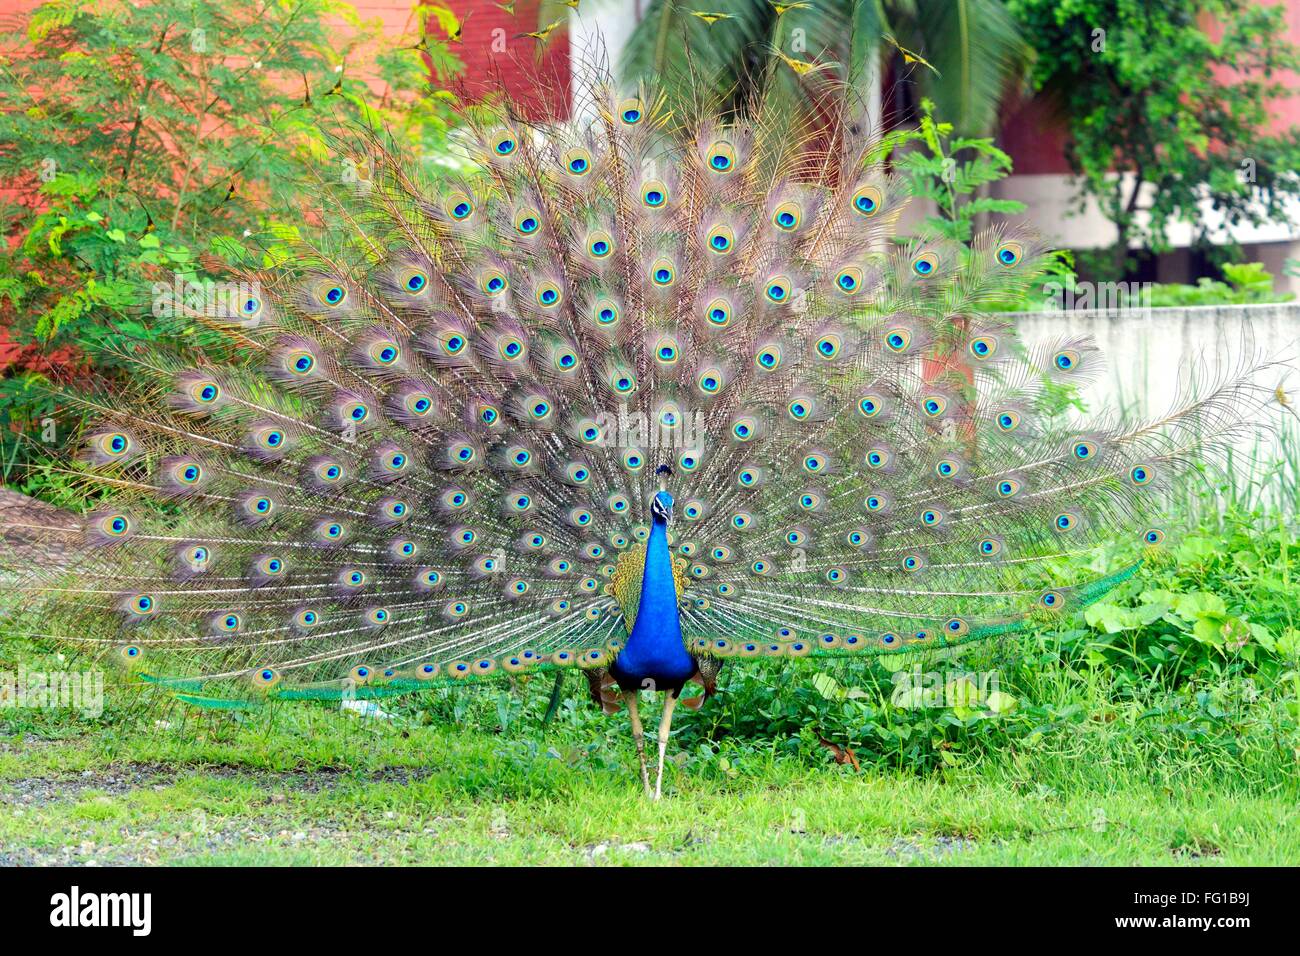 Peafowl Peacock Surat Gujarat India Asia Sept 2010 Stock Photo